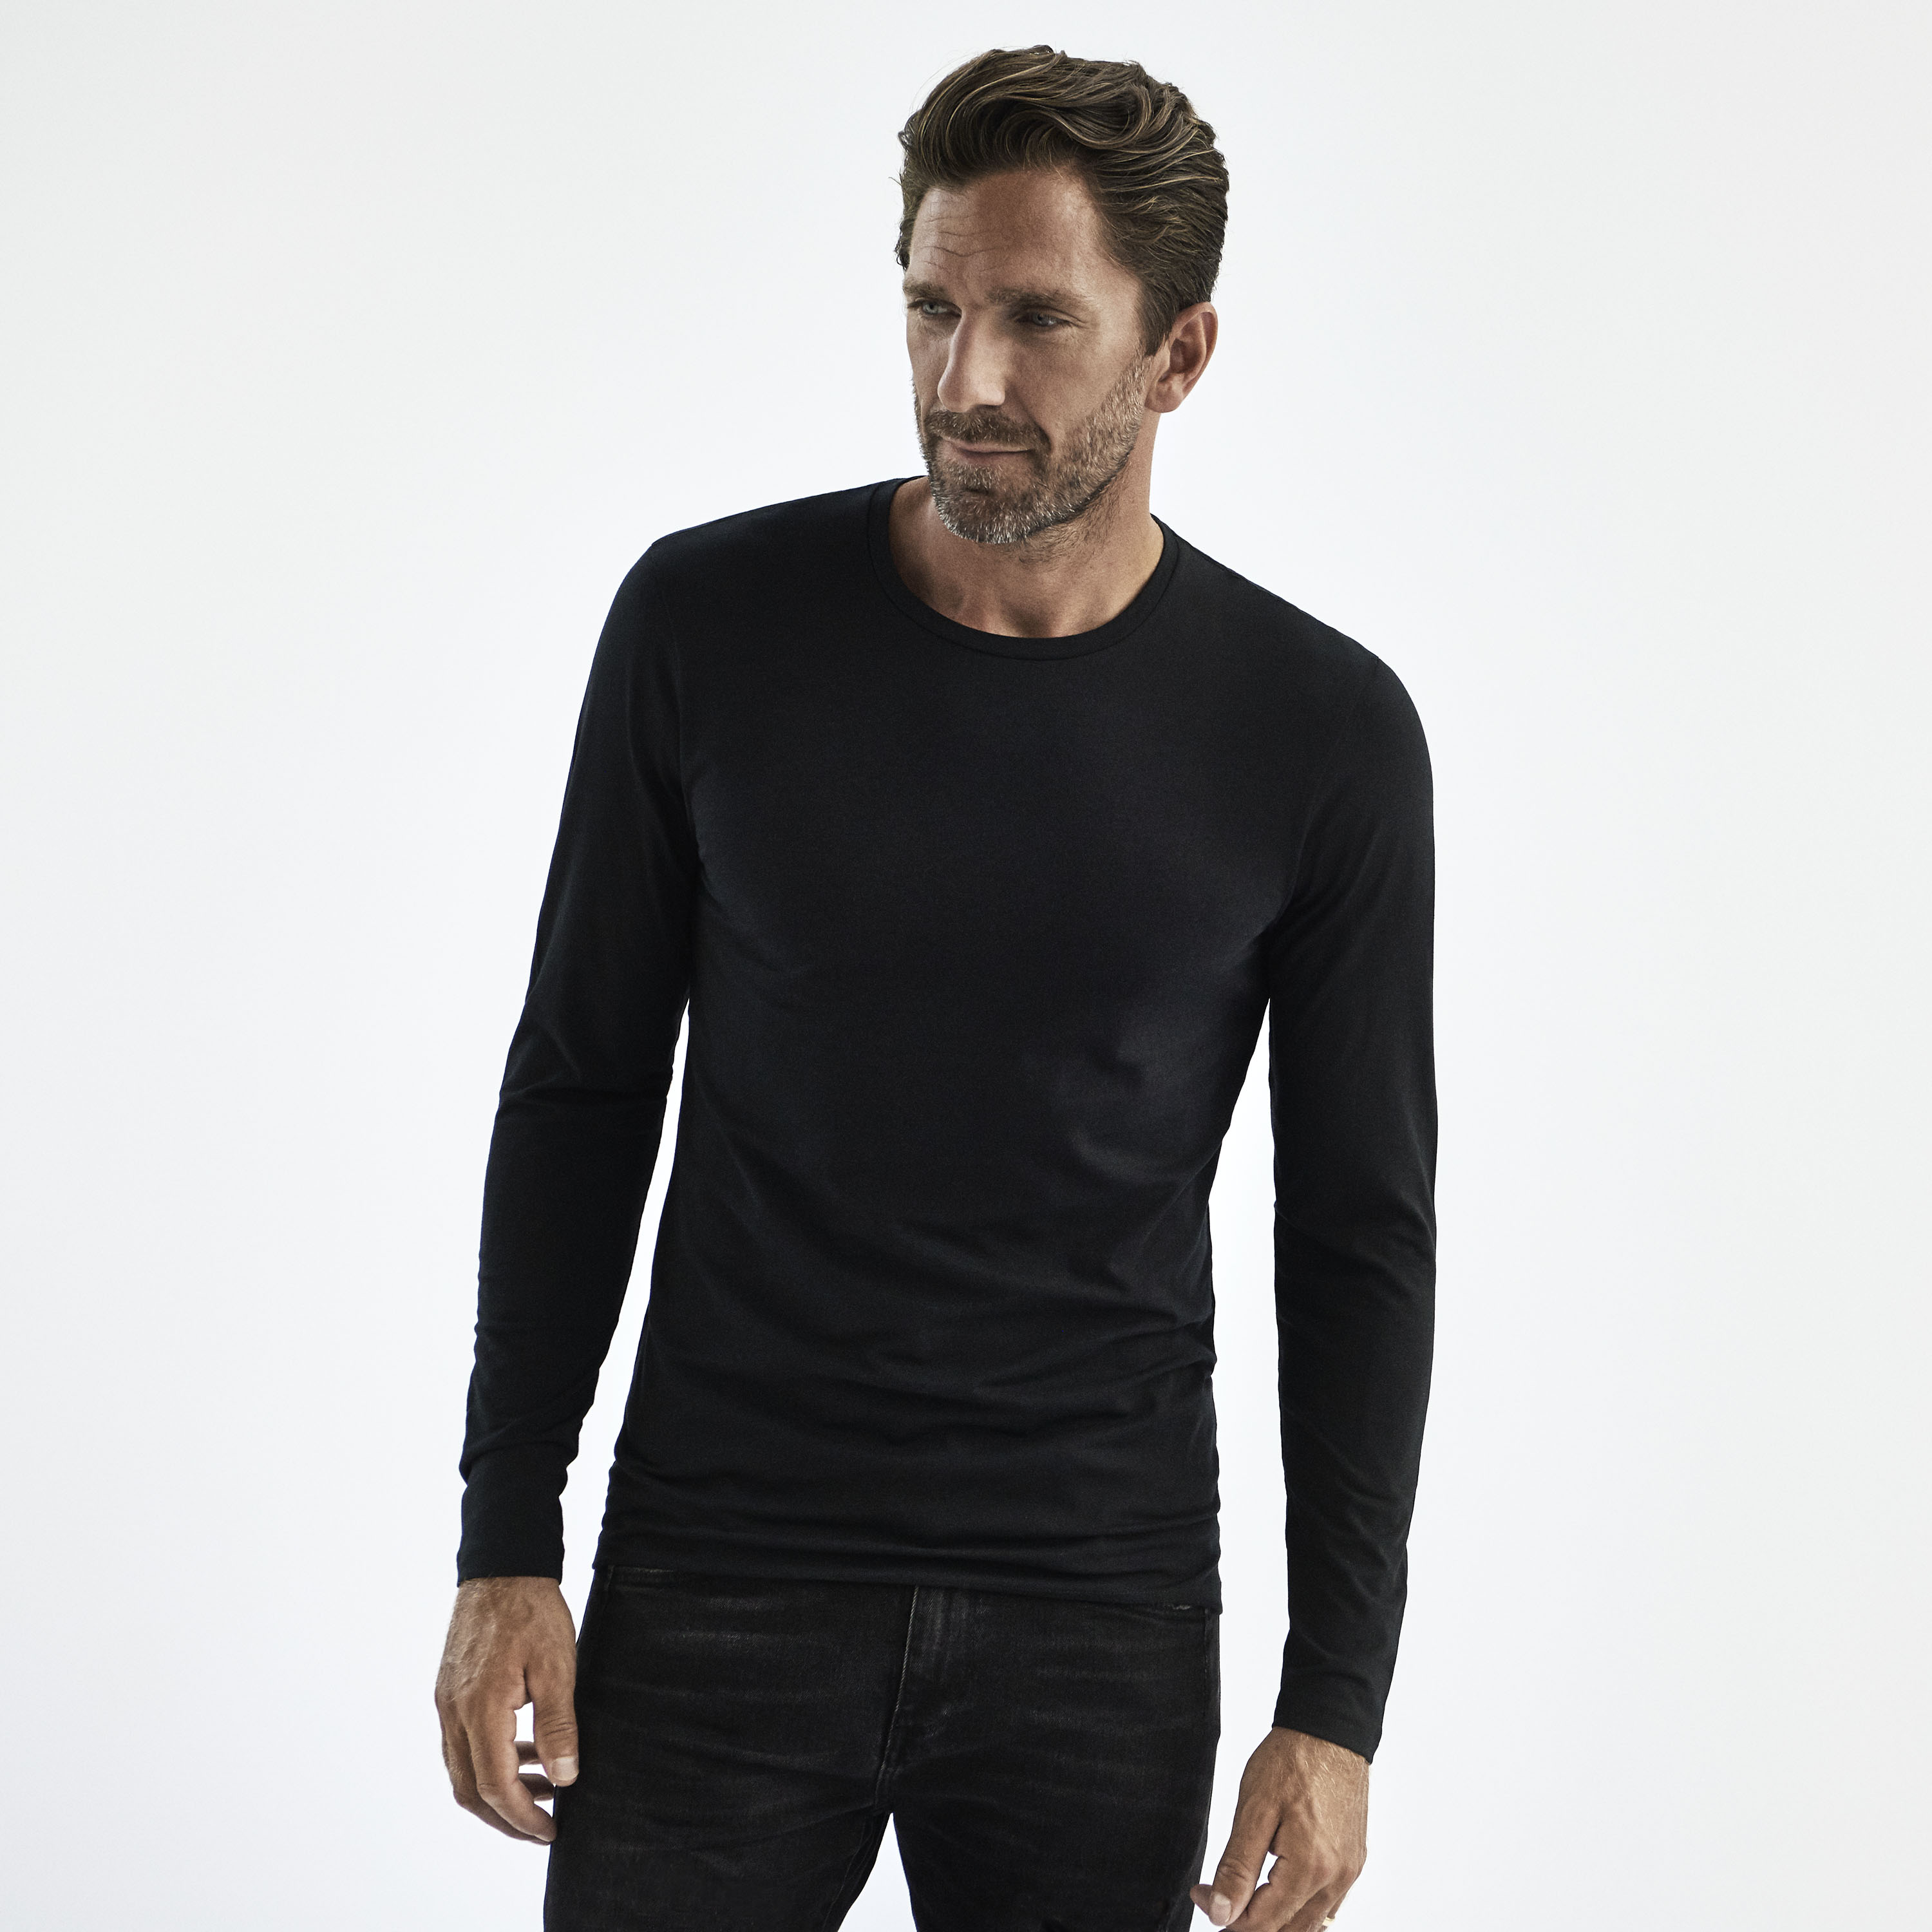 Men's long-sleeved black T-shirt made of organic cotton and elastane ...